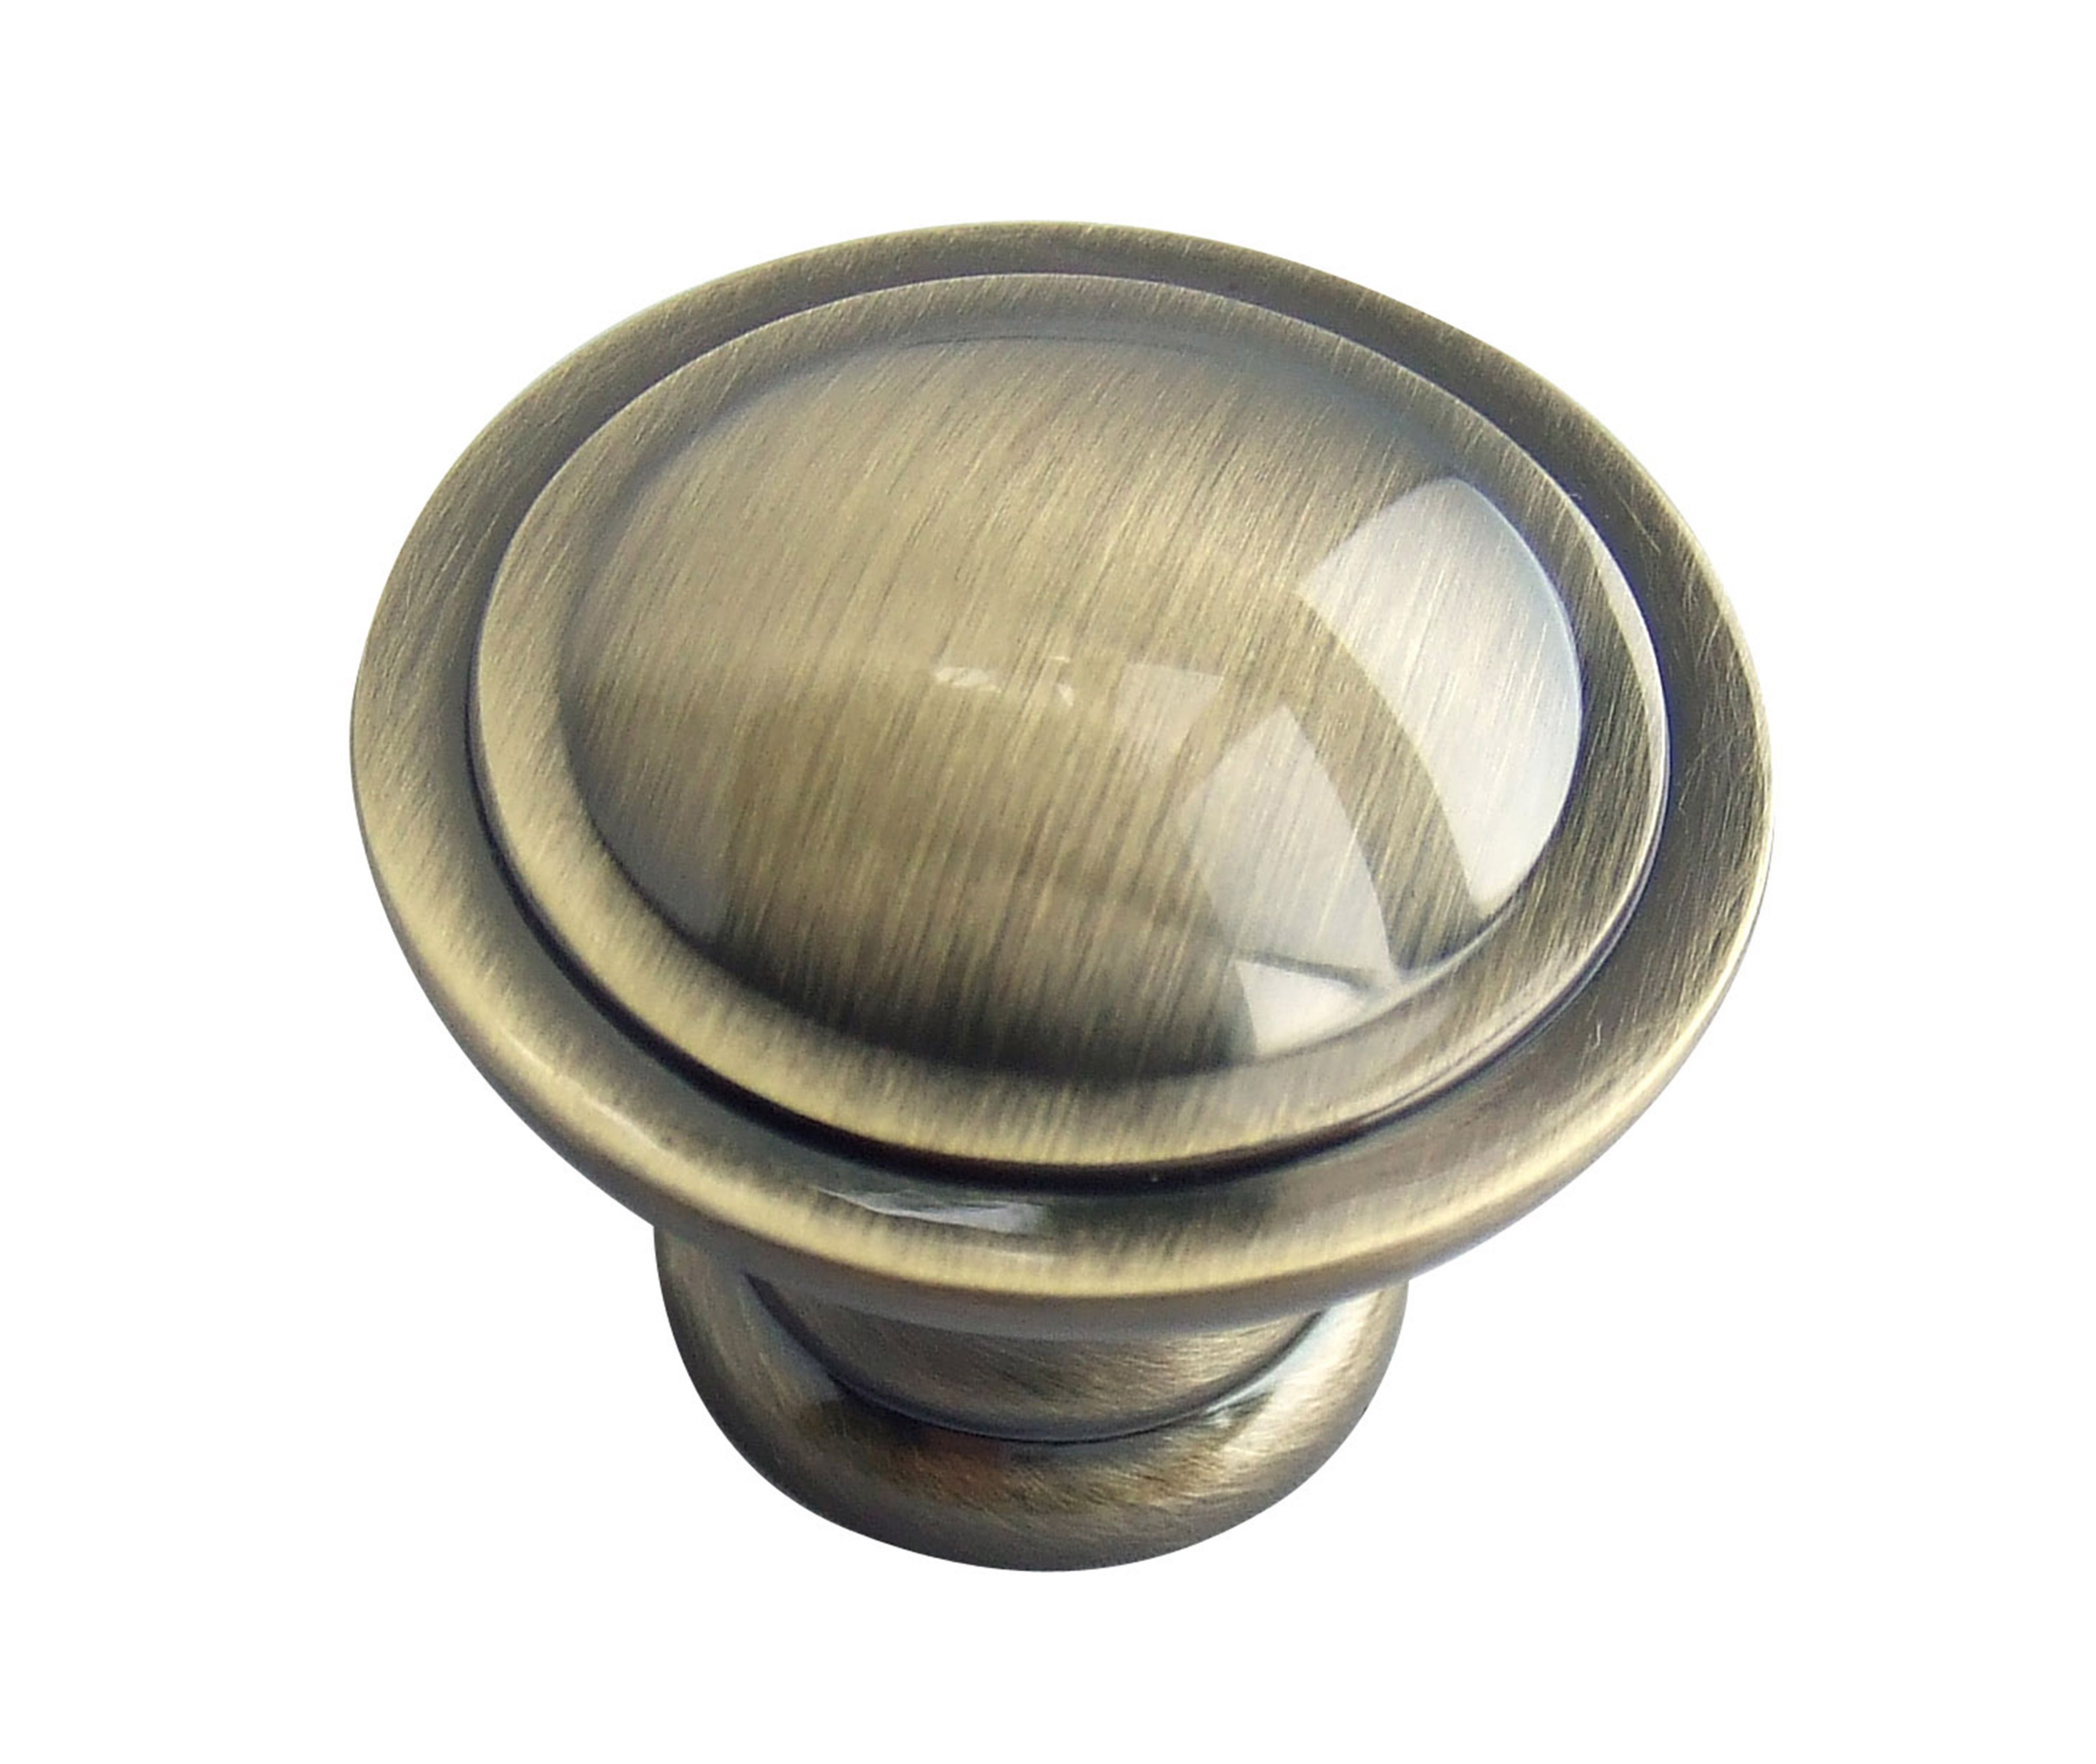 Zinc alloy Antique brass effect Round Cabinet Knob (Dia)34.3mm